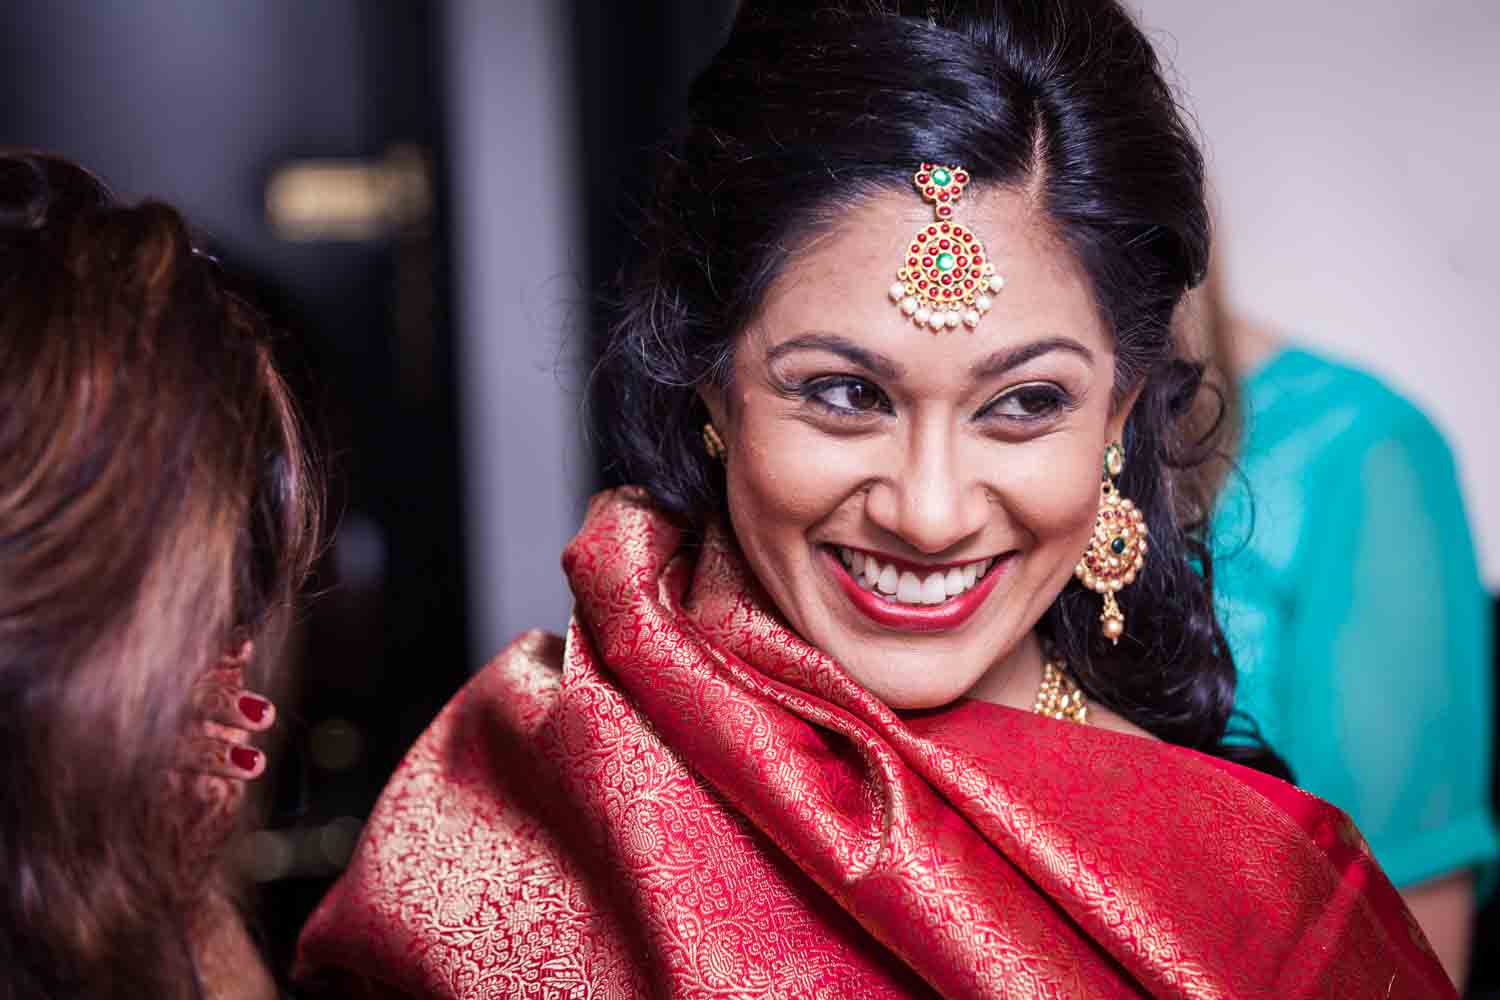 Indian bride wearing traditional sari